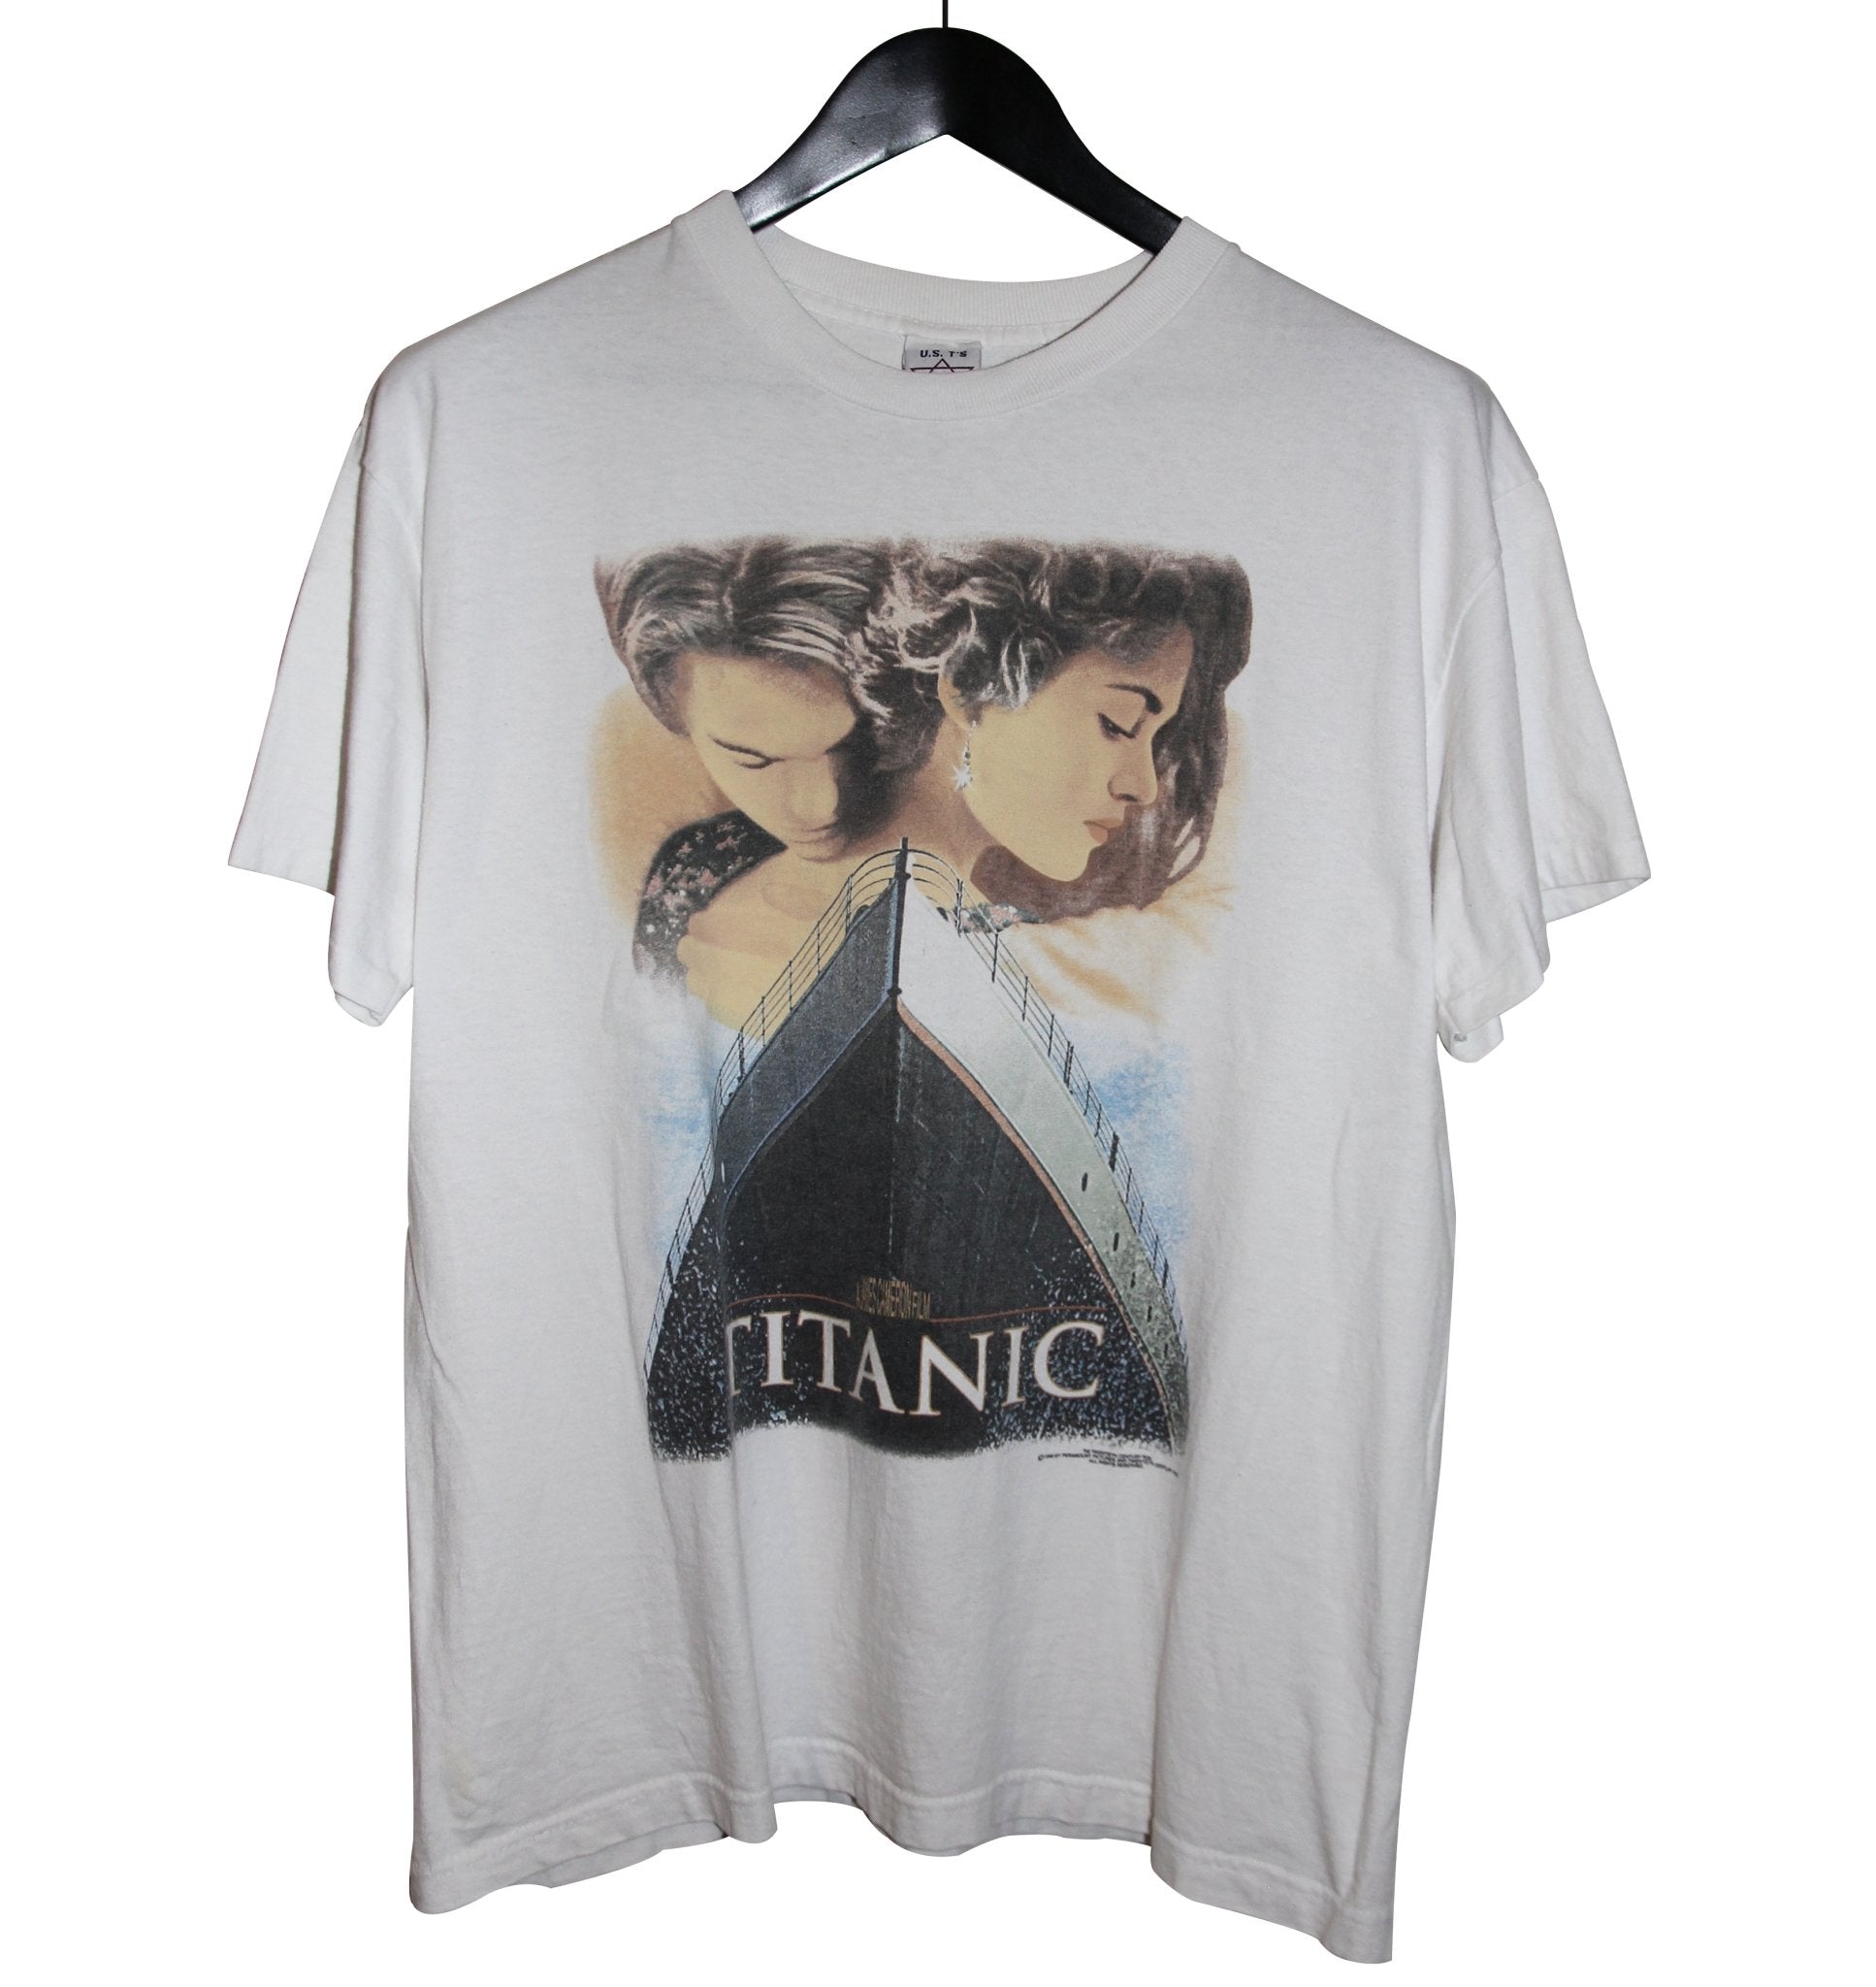 Titanic 1998 Movie Poster Promo Shirt - Faded AU